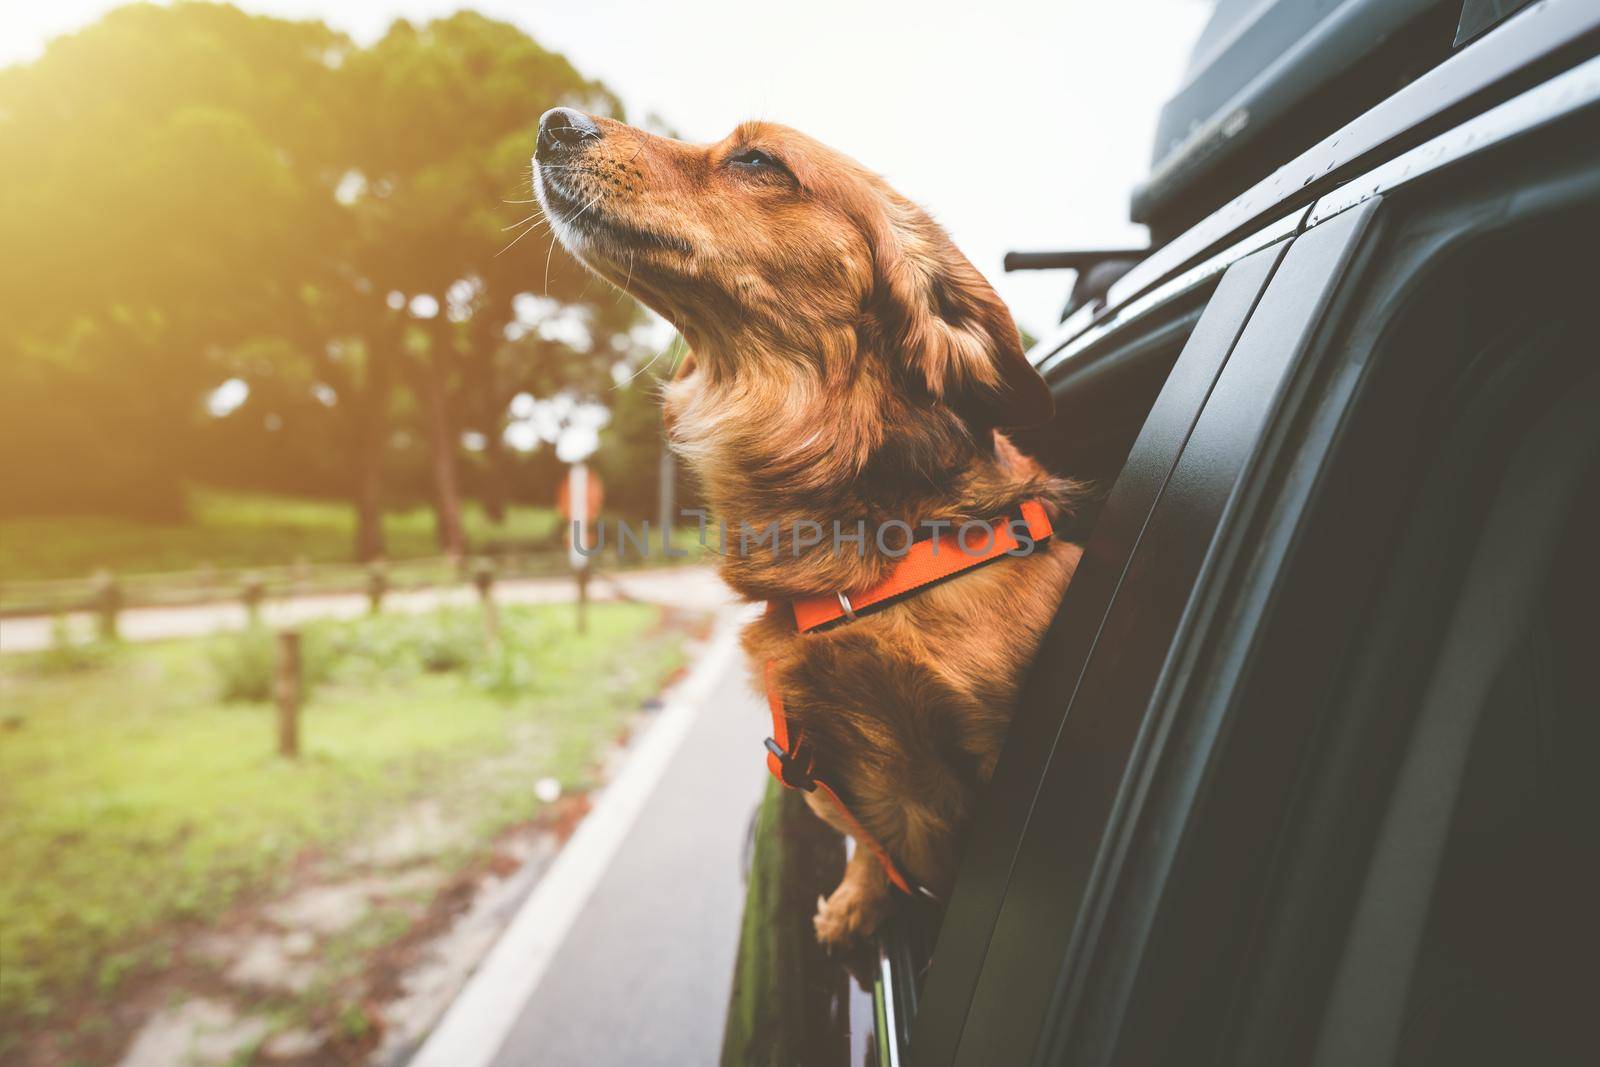 Dachshund dog riding in car and looking out from car window. Happy dog enjoying life. Dog road trip adventure by DariaKulkova